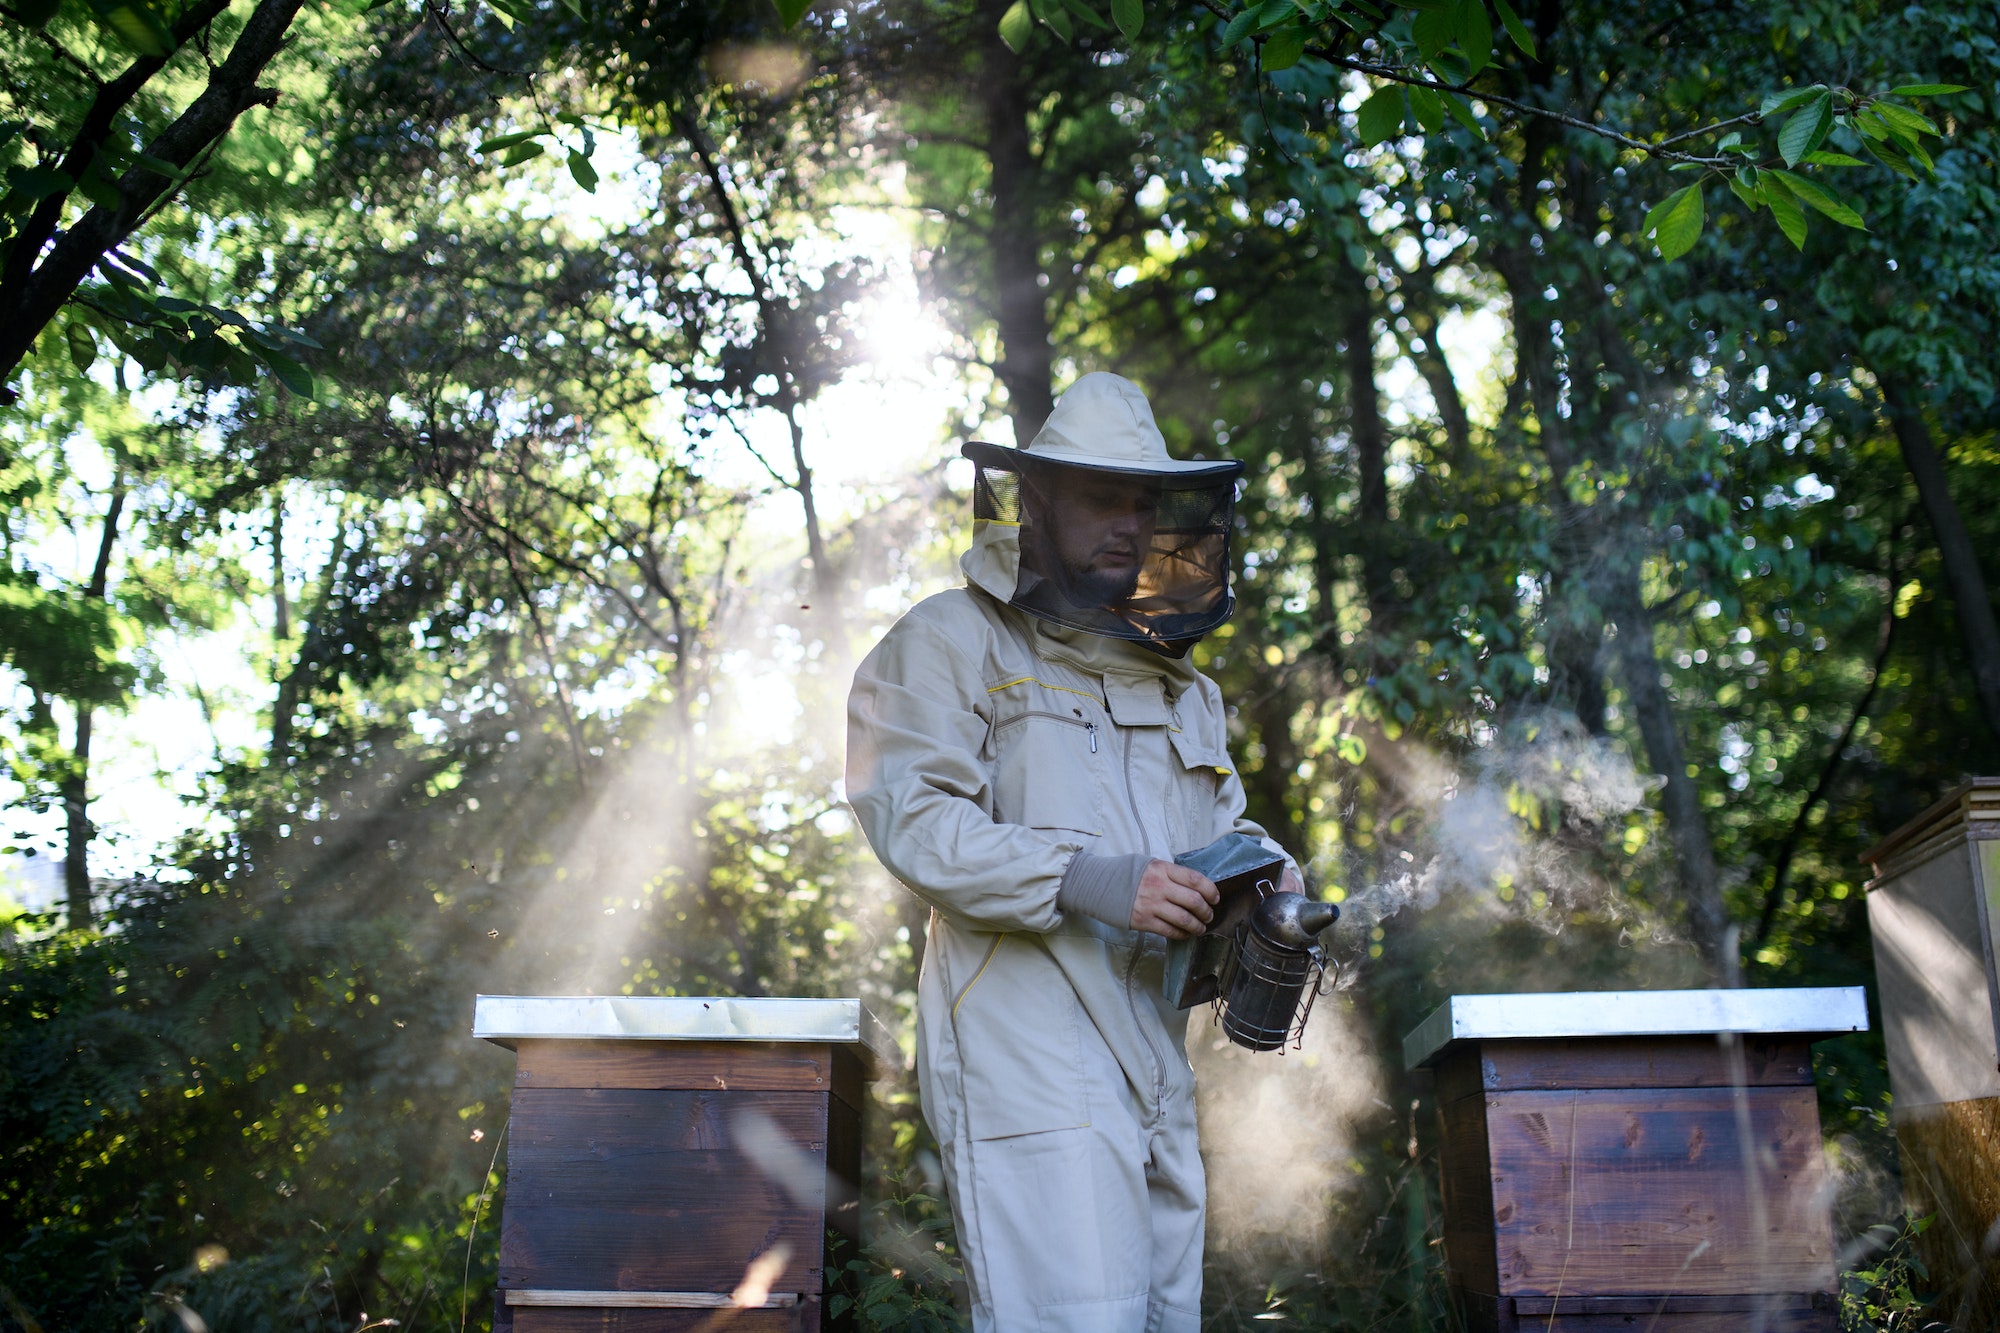 Portrait of man beekeeper working in apiary, using bee smoker